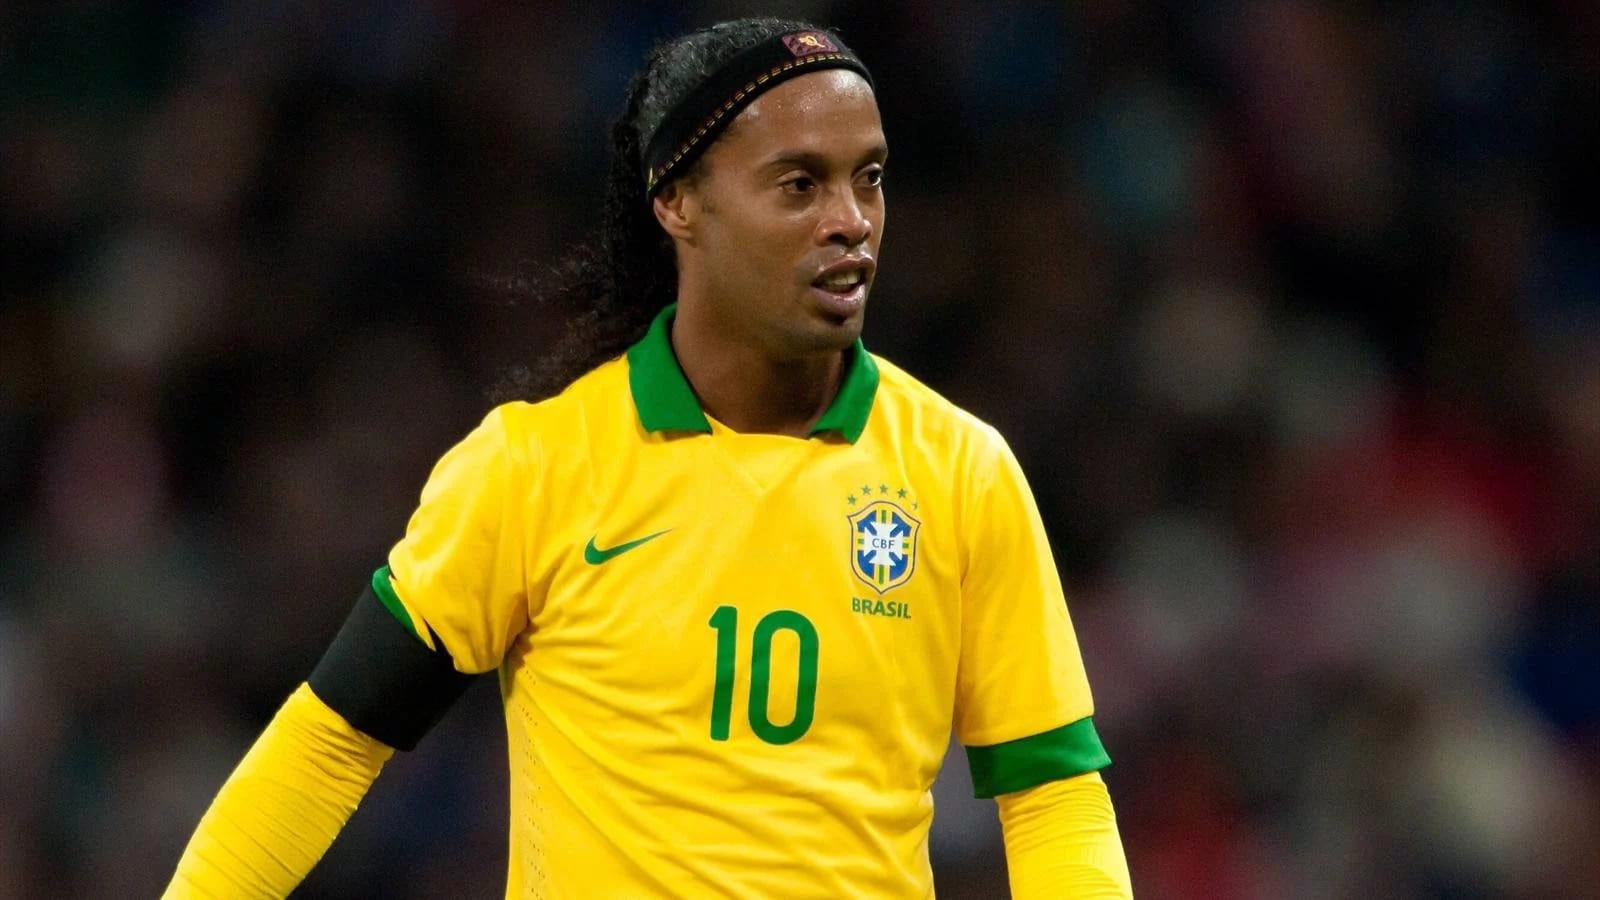 Ronaldinho playing for Brazil